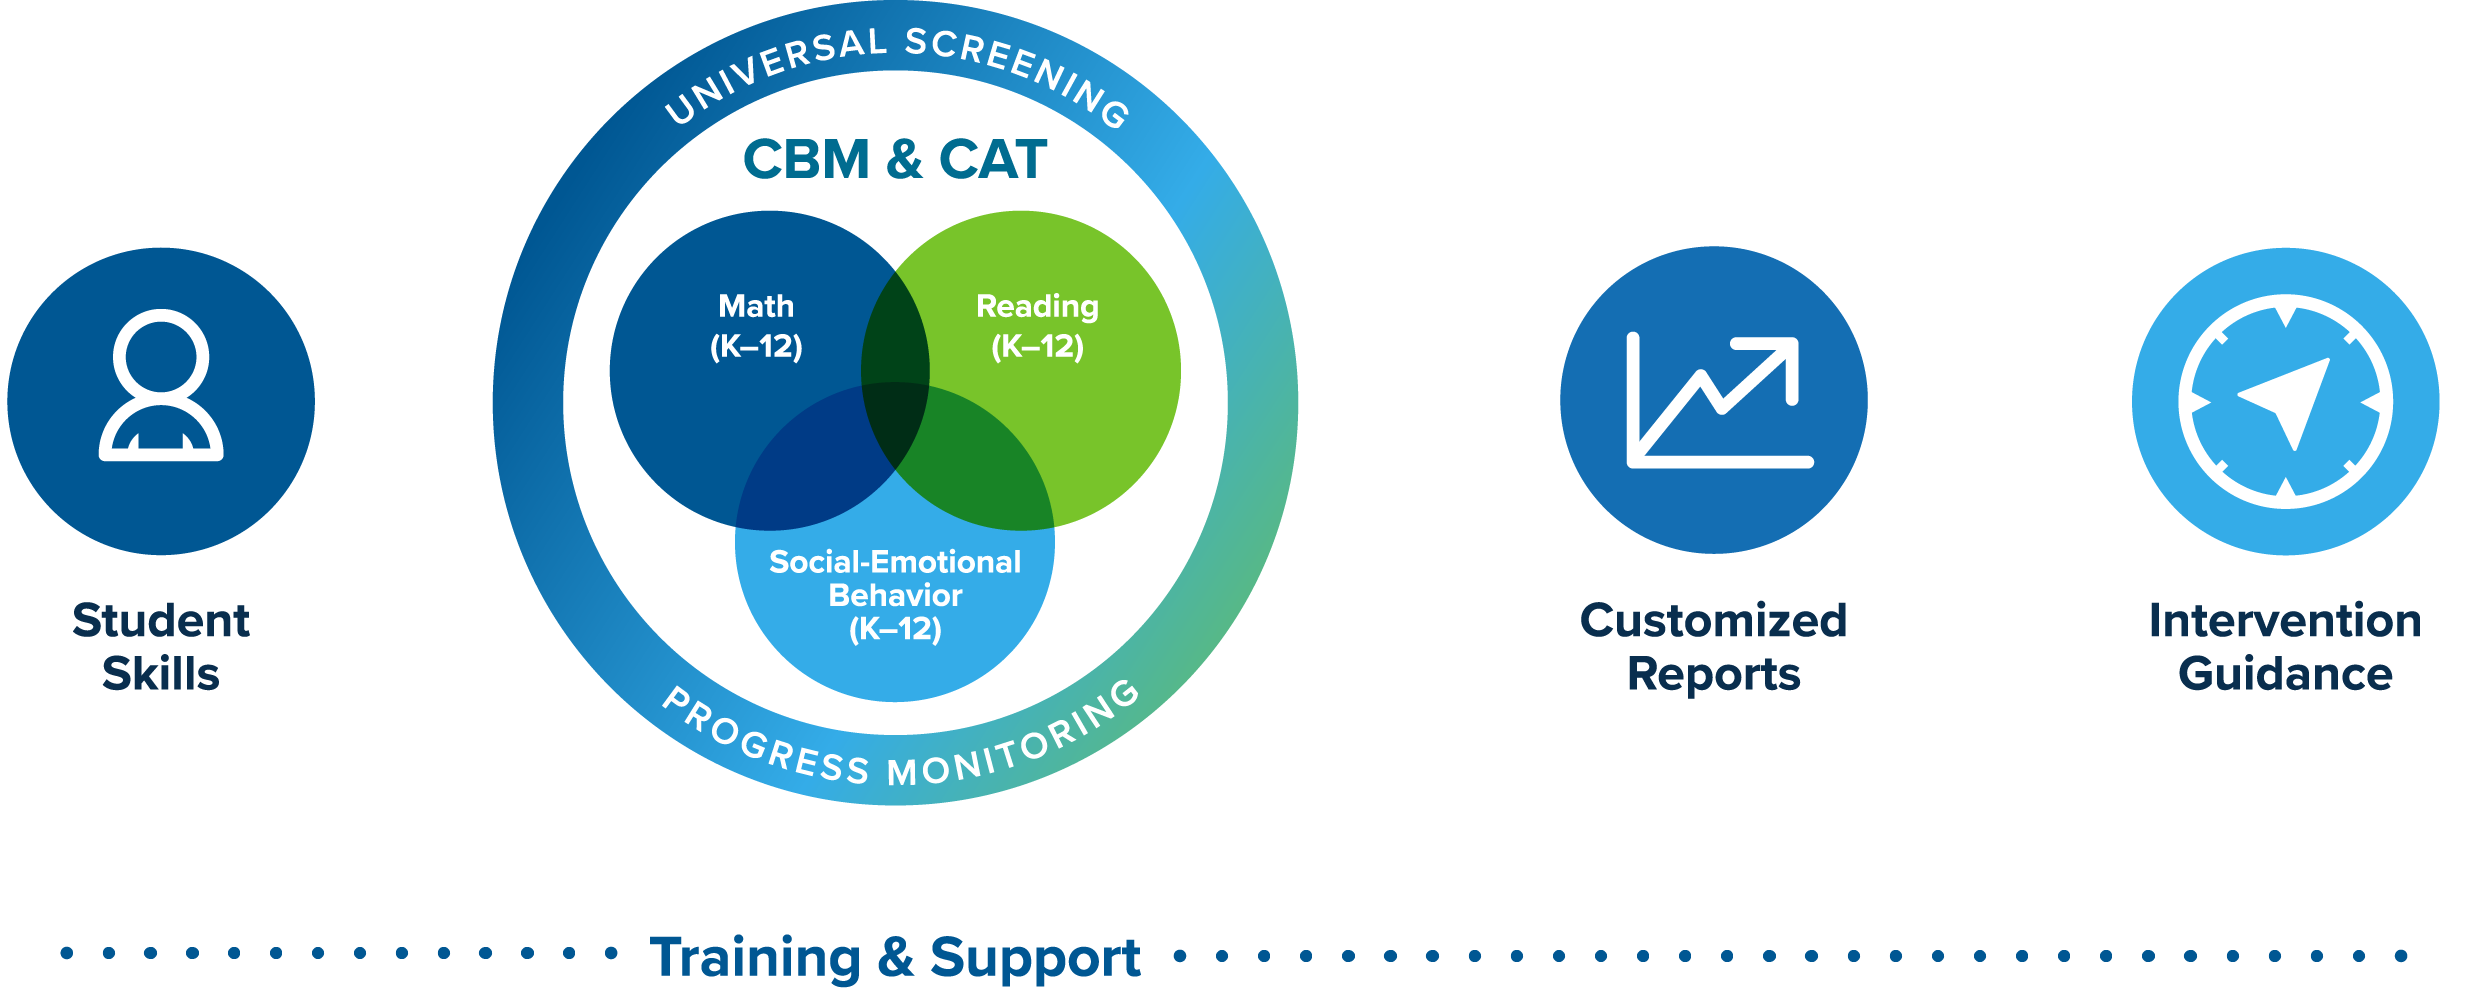 Universal Screening and progress monitoring